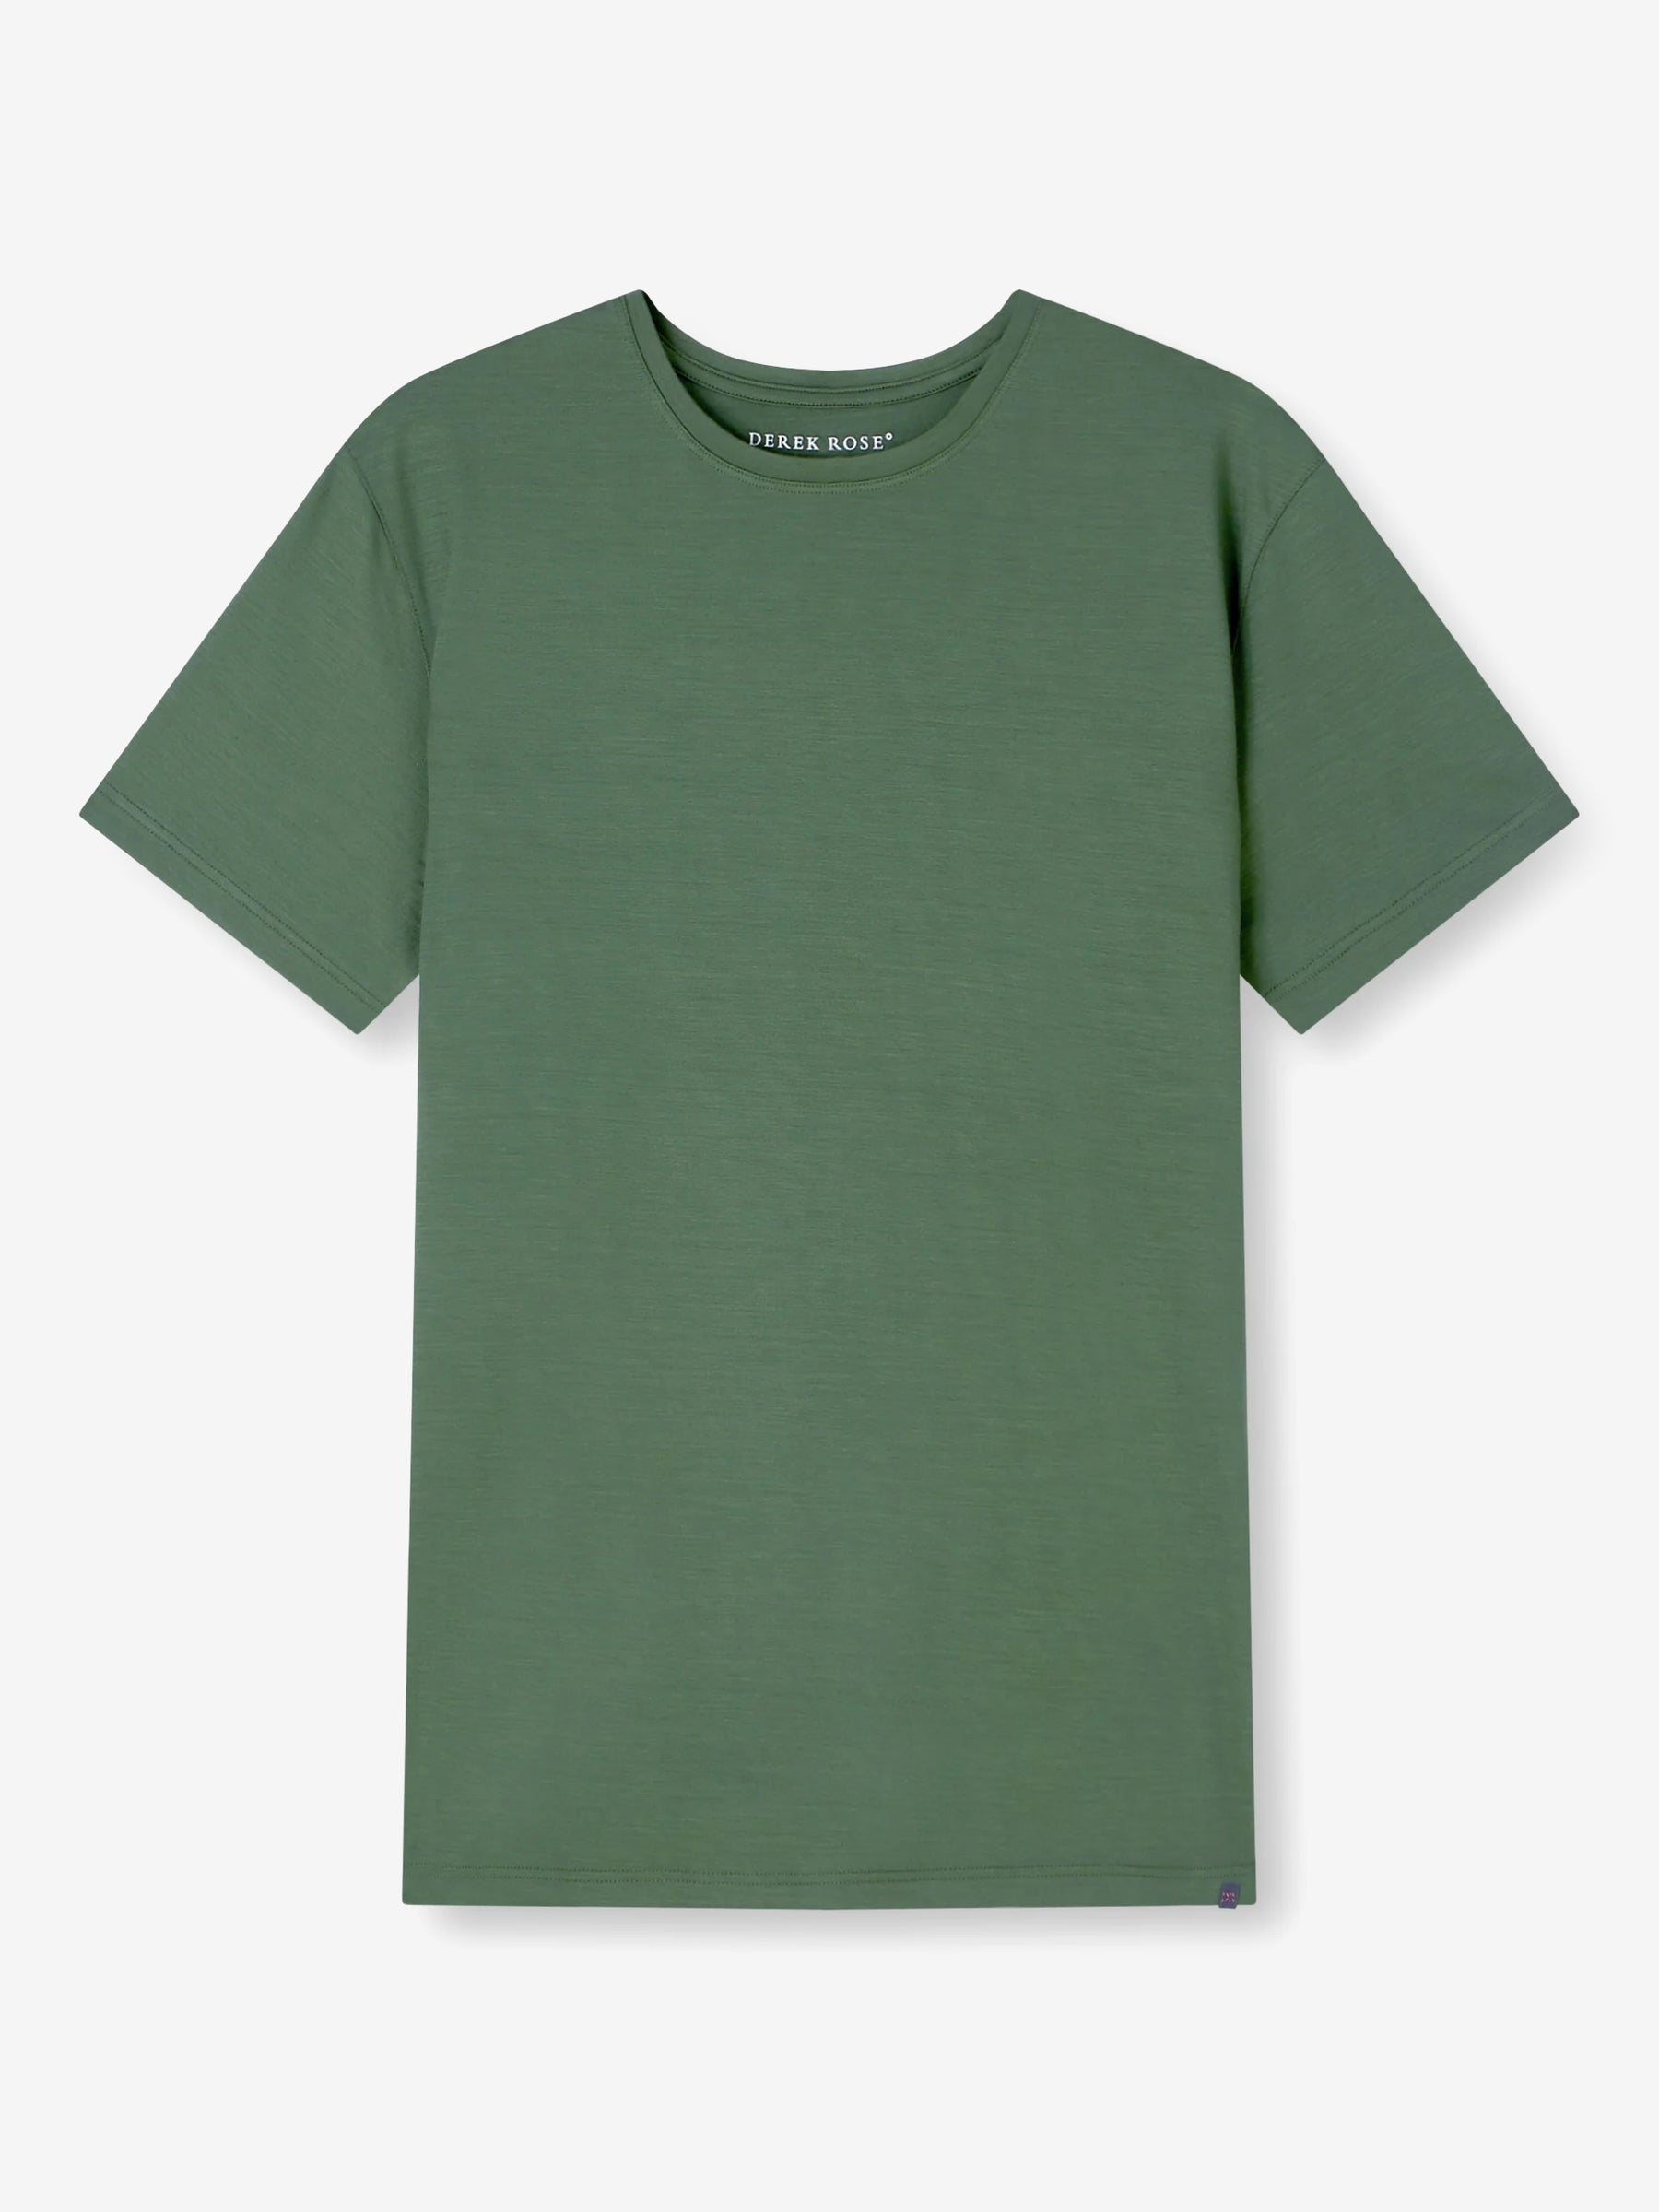 Men's T-Shirt Basel Micro Modal Stretch Hunter Green